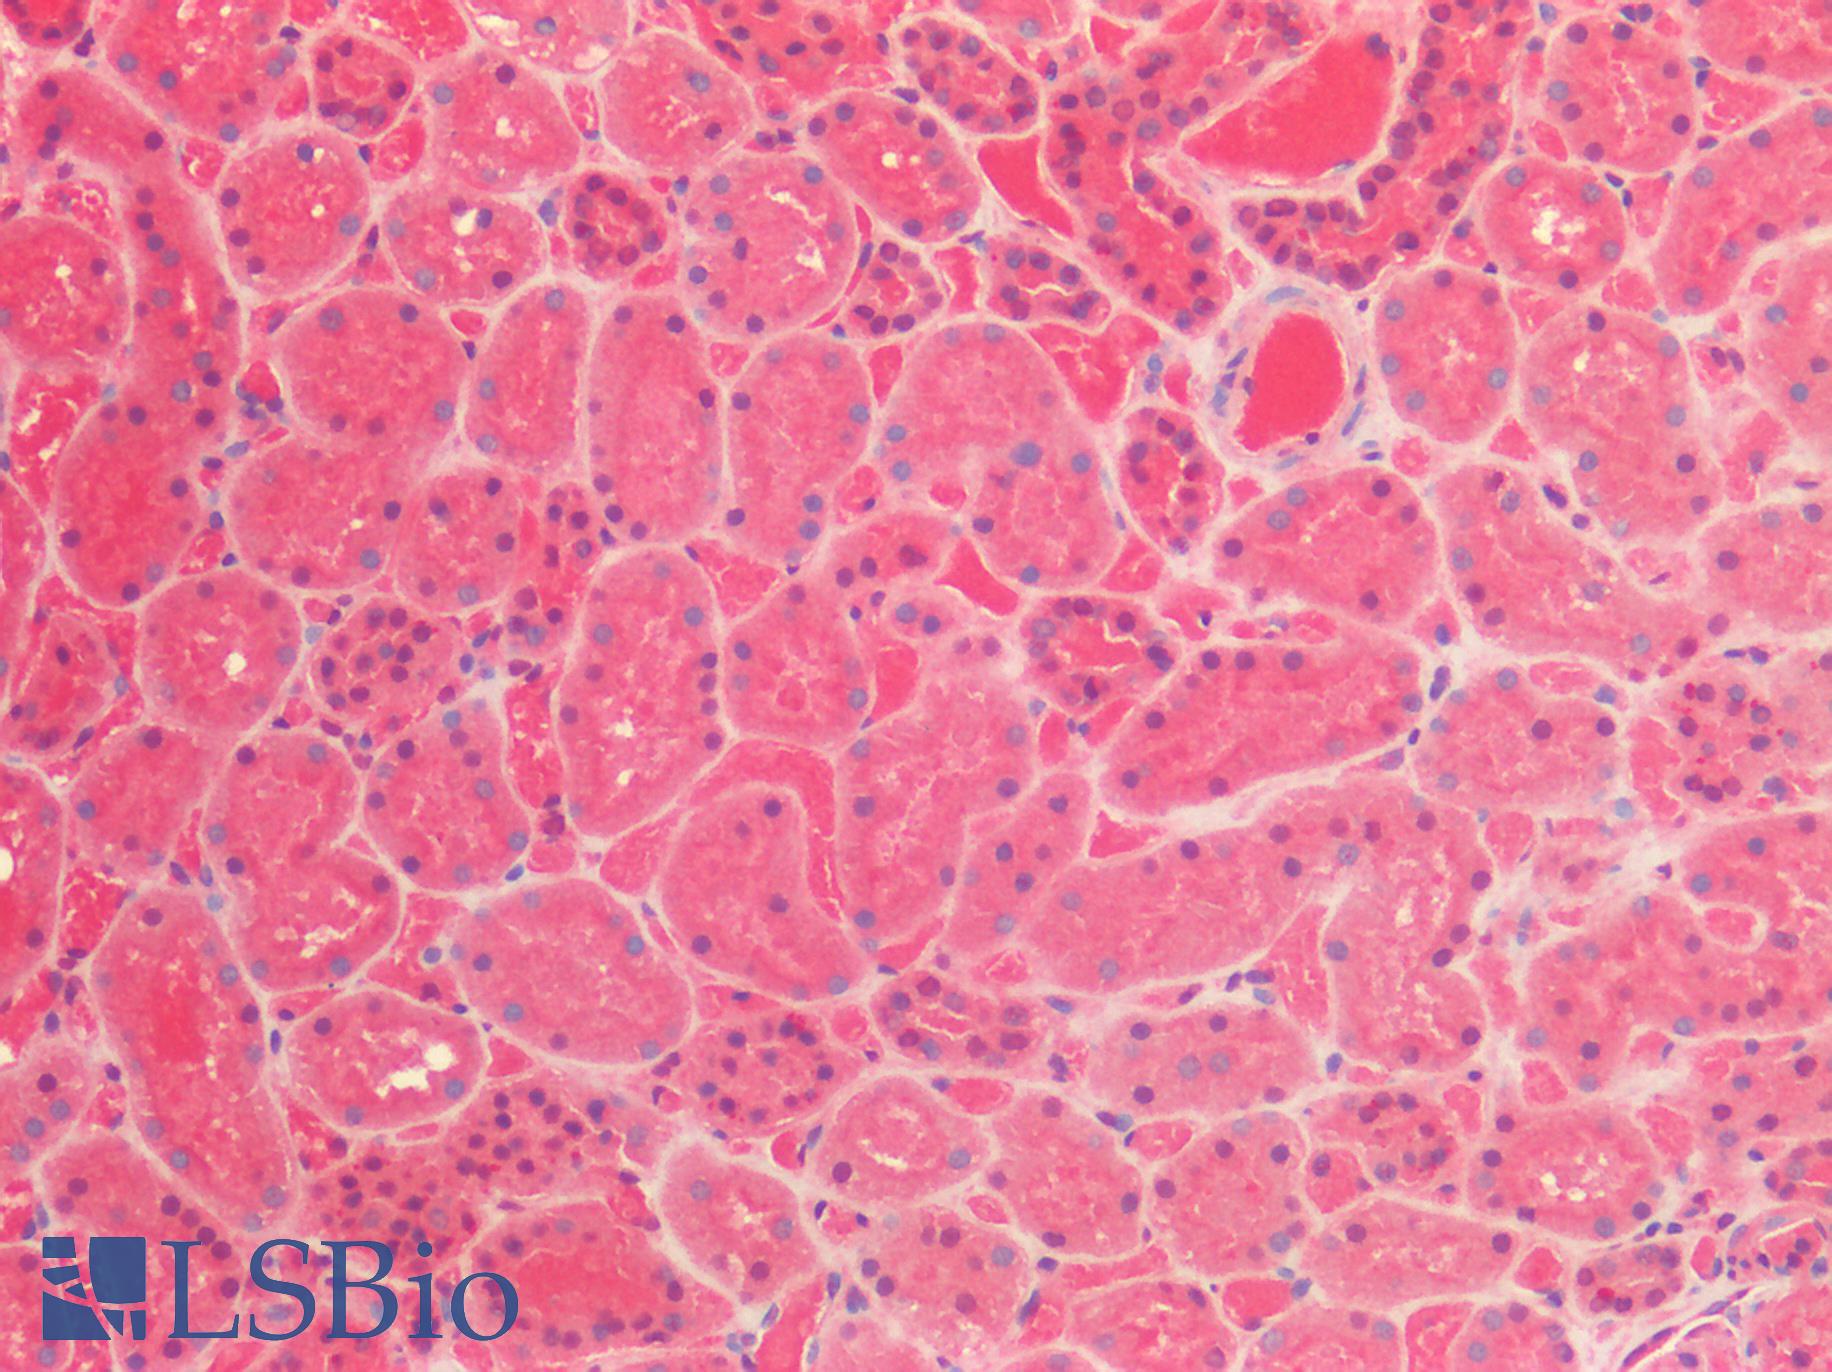 HDAC6 Antibody - Human Kidney: Formalin-Fixed, Paraffin-Embedded (FFPE)